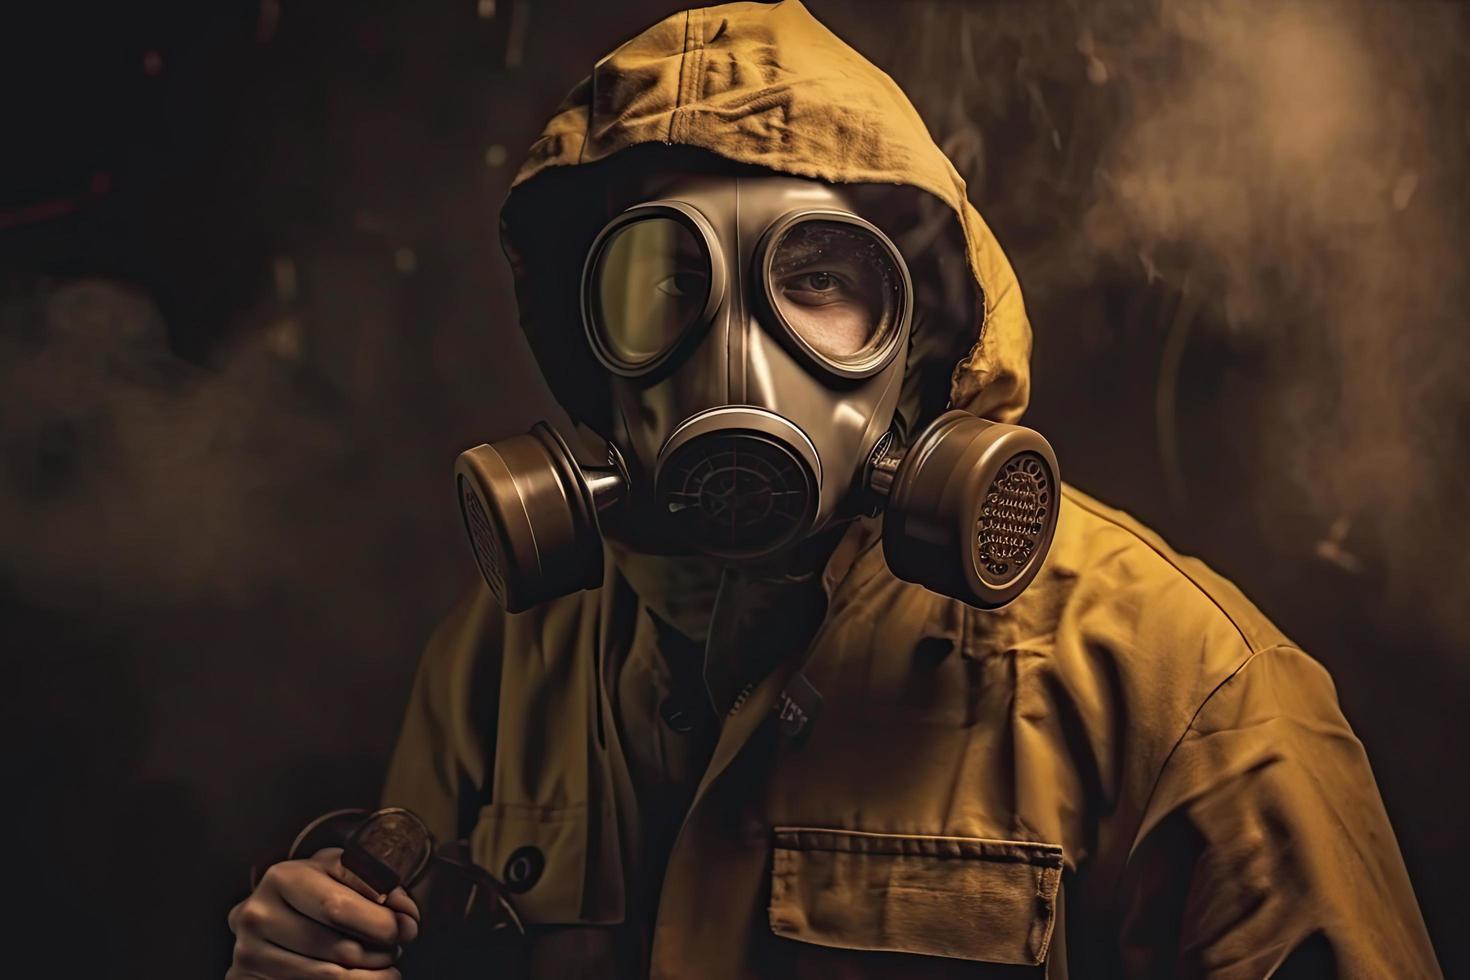 Mens met een gas- masker, nucleair oorlog en milieu ramp, radioactiviteit catastrofe, leger uitrusting foto